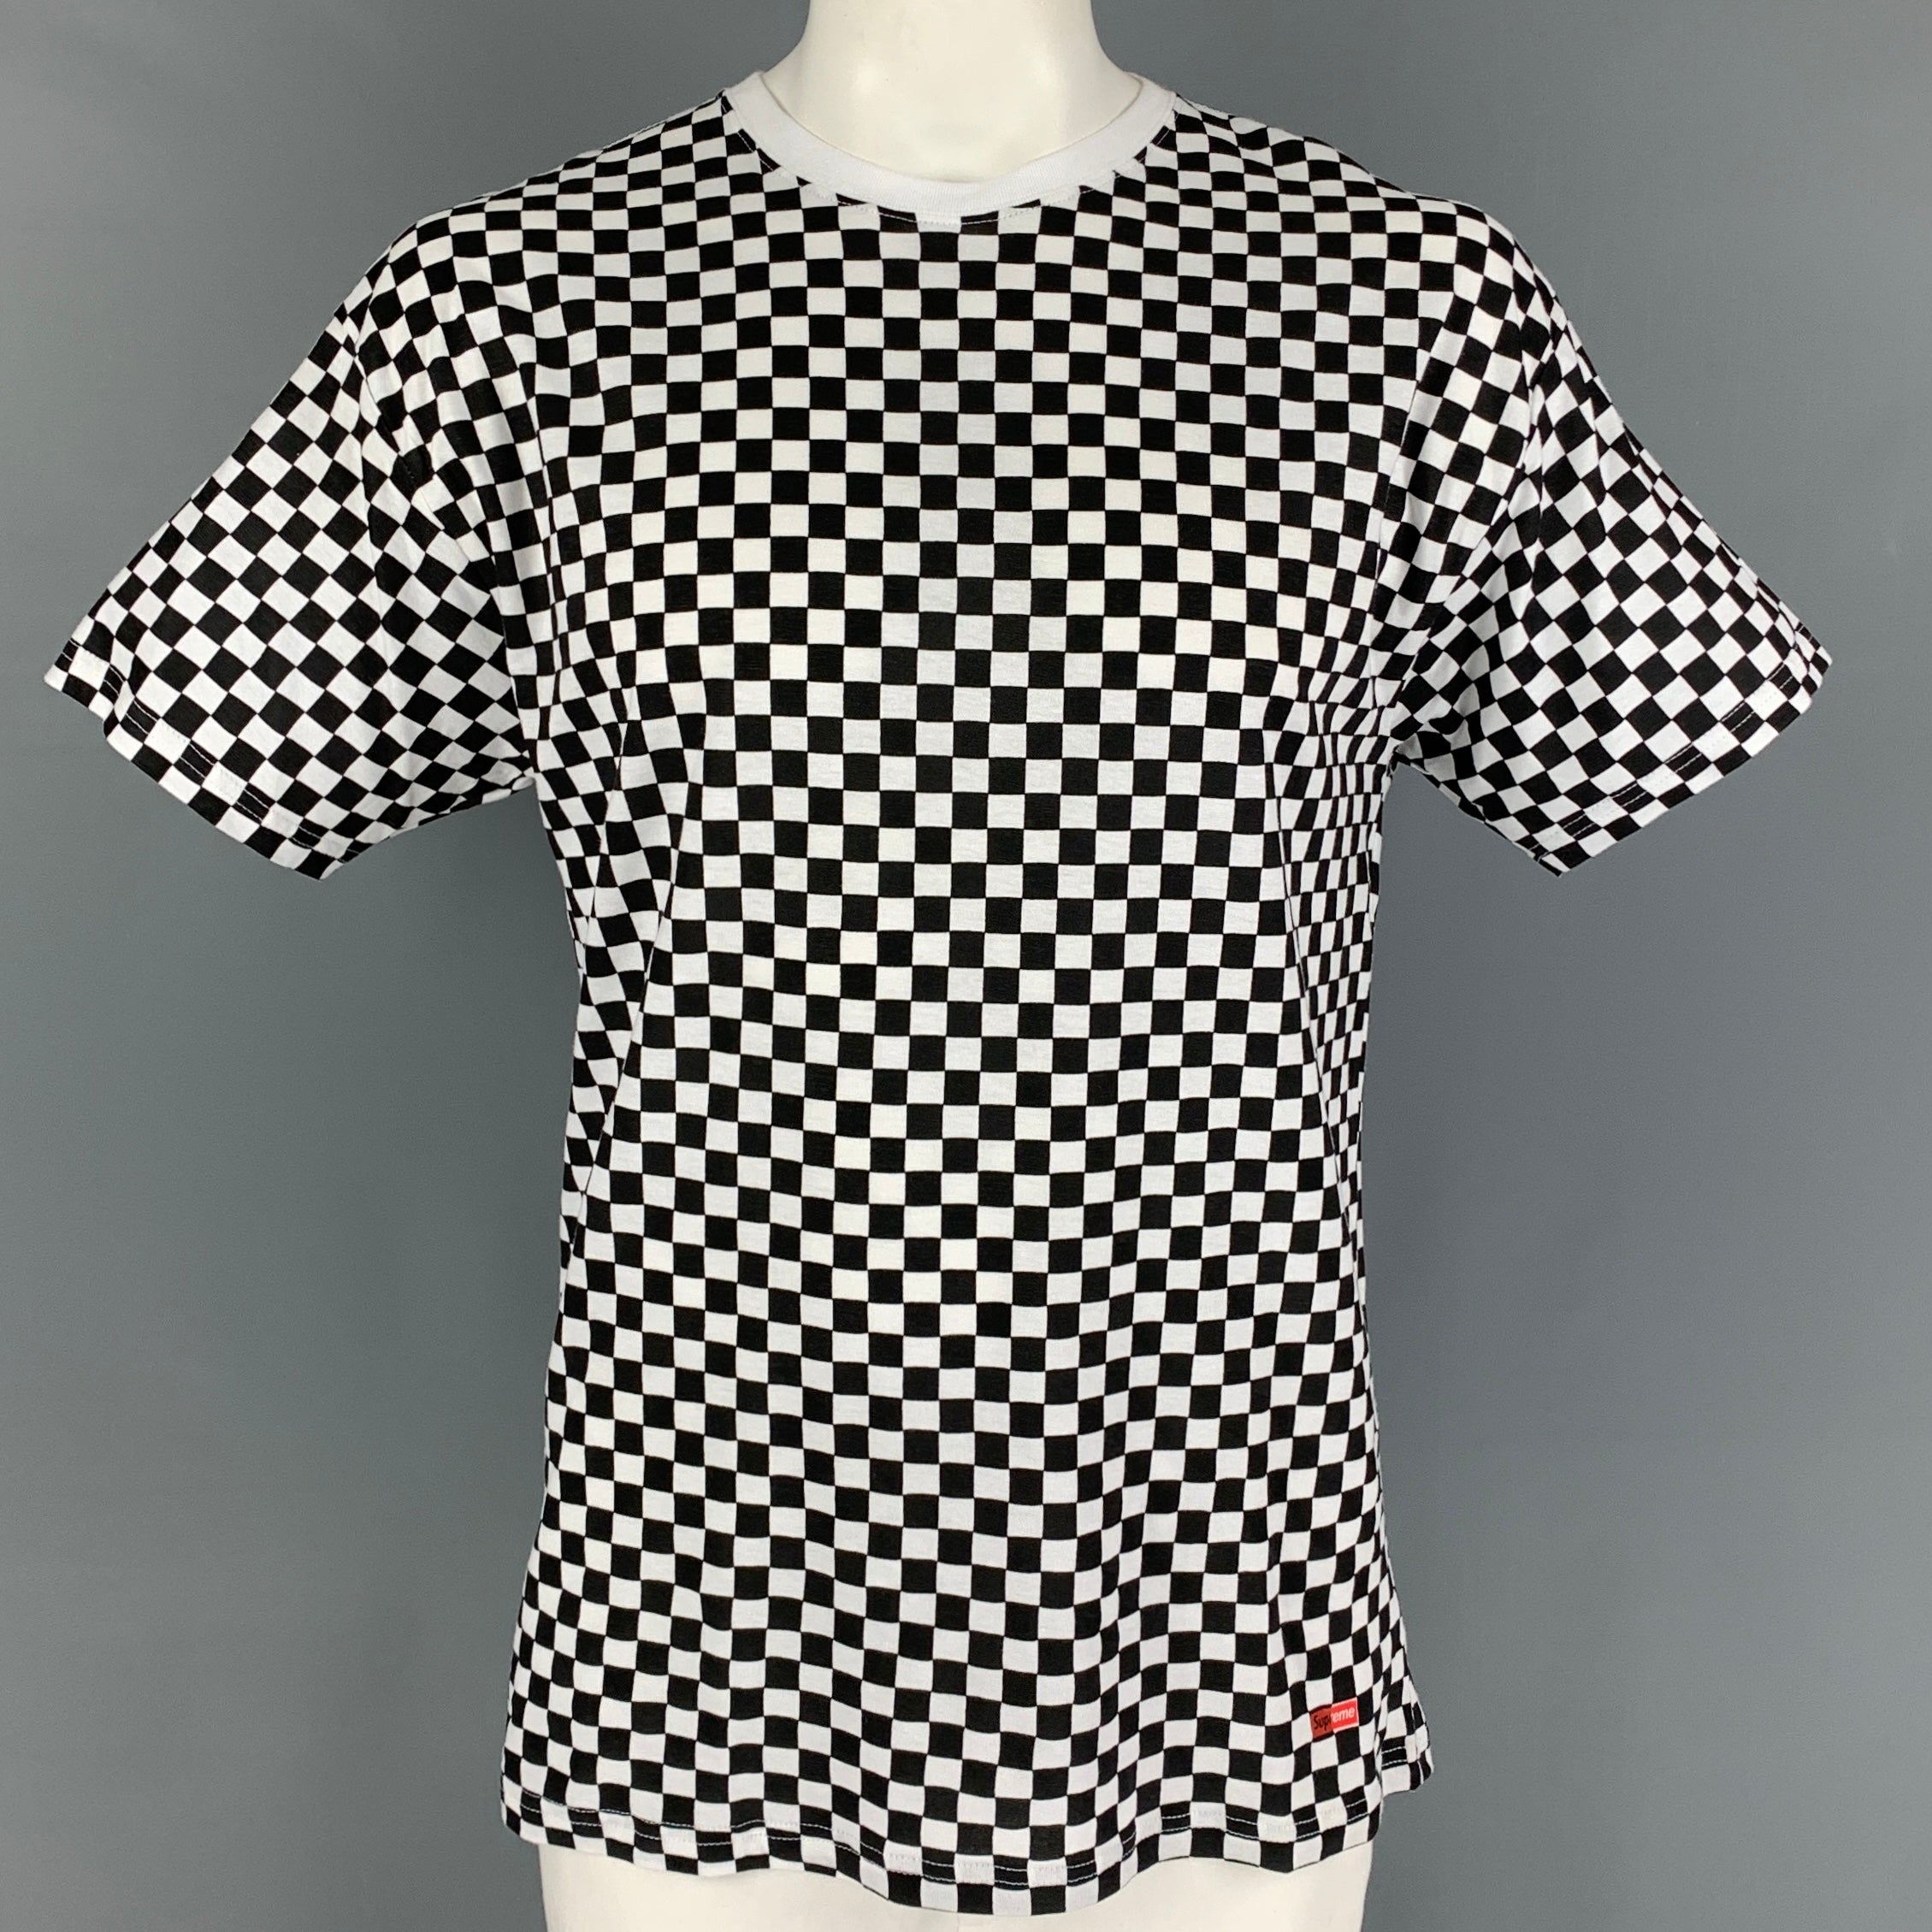 SUPREME x HANES Size L Black White Checkered Cotton T-shirt